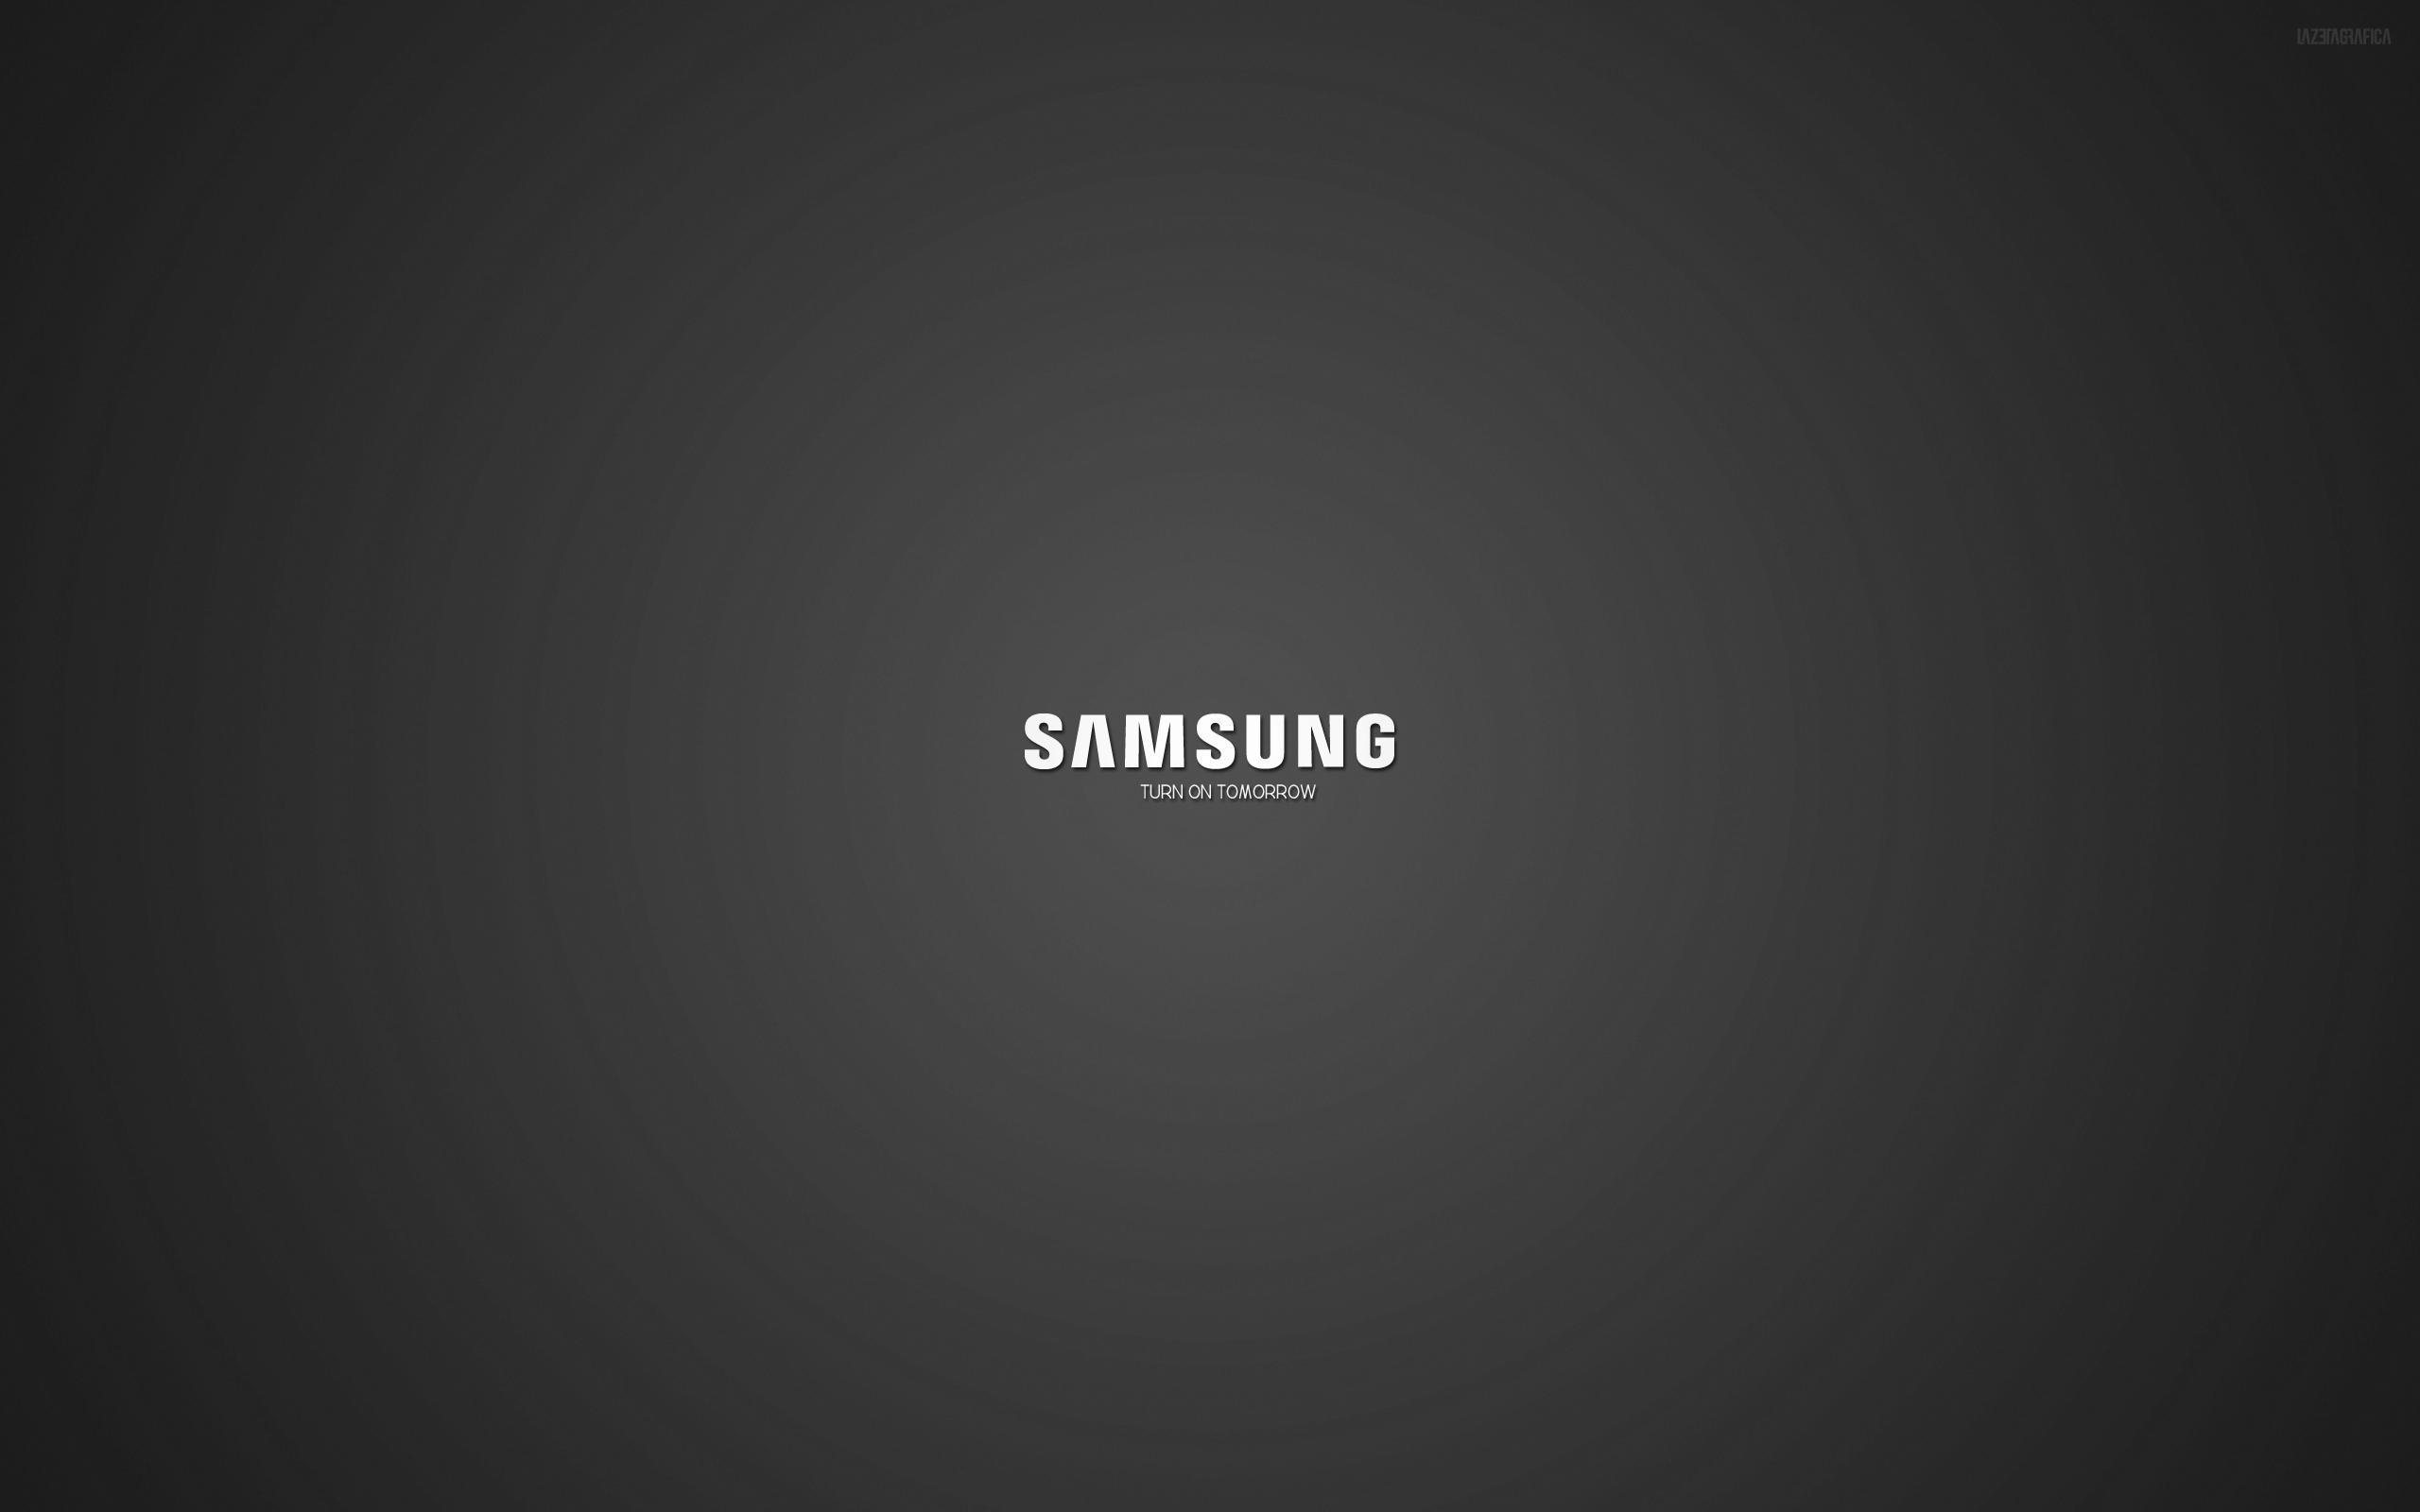 Samsung Logo Wallpapers Top Free Samsung Logo Backgrounds Wallpaperaccess